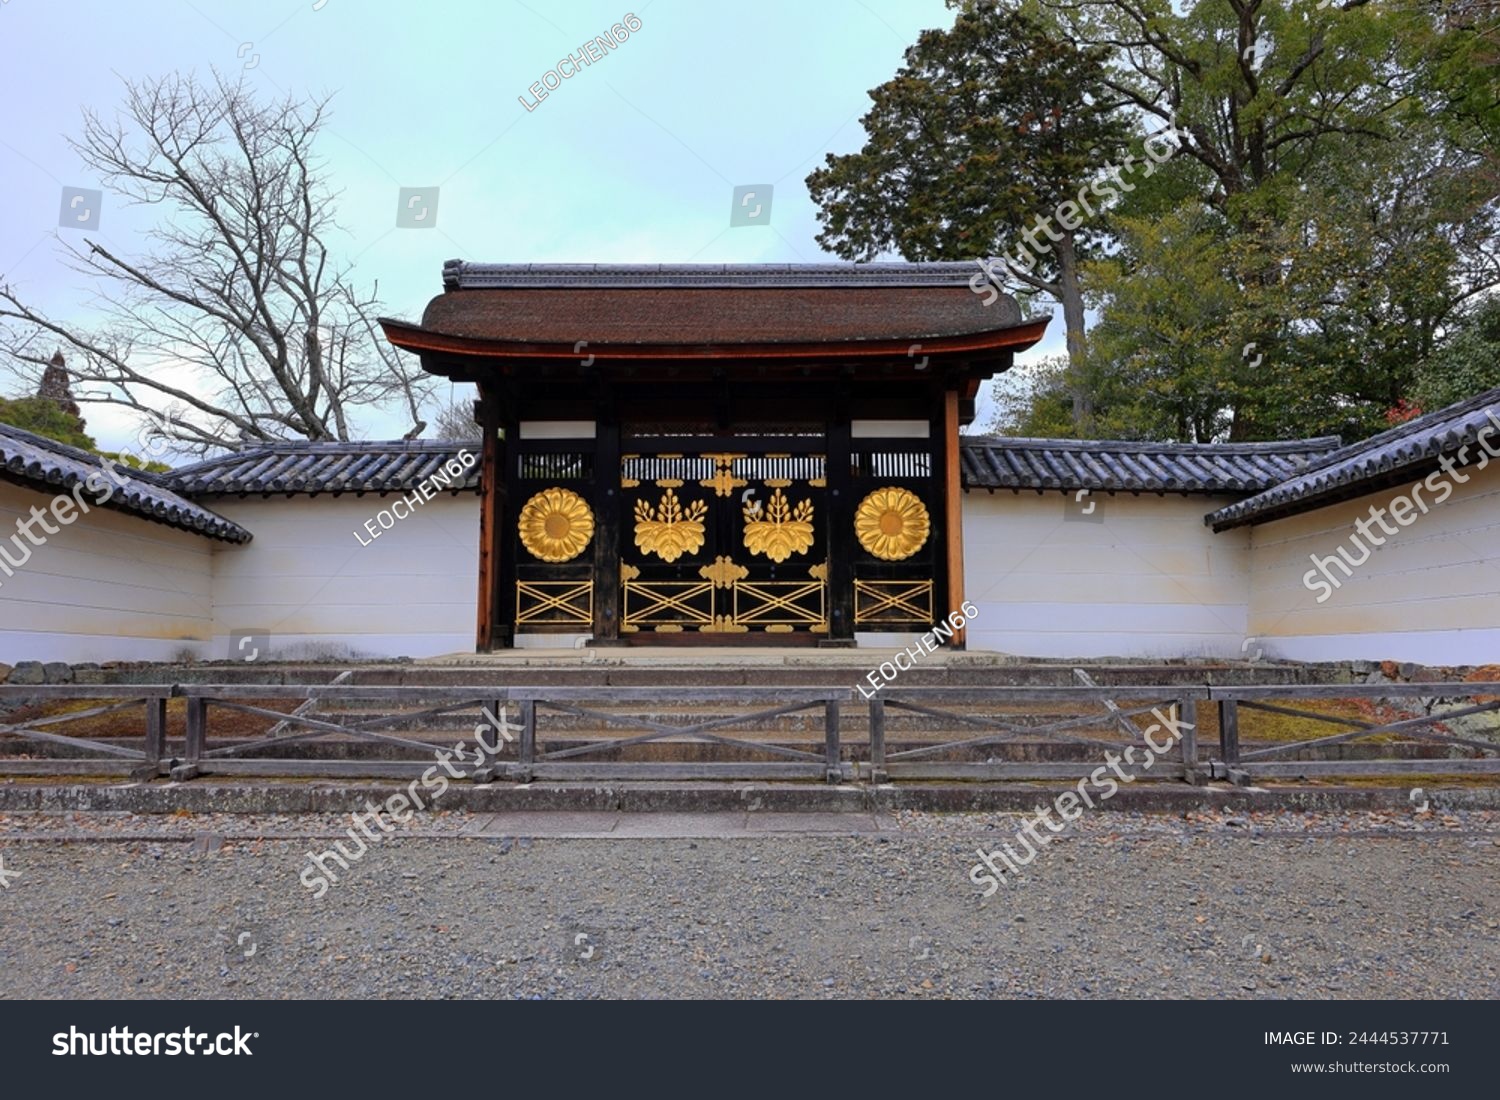 Daigo-ji Temple a Buddhist temple with 5-story pagoda, at Daigohigashiojicho, Fushimi Ward, Kyoto, Japan  #2444537771